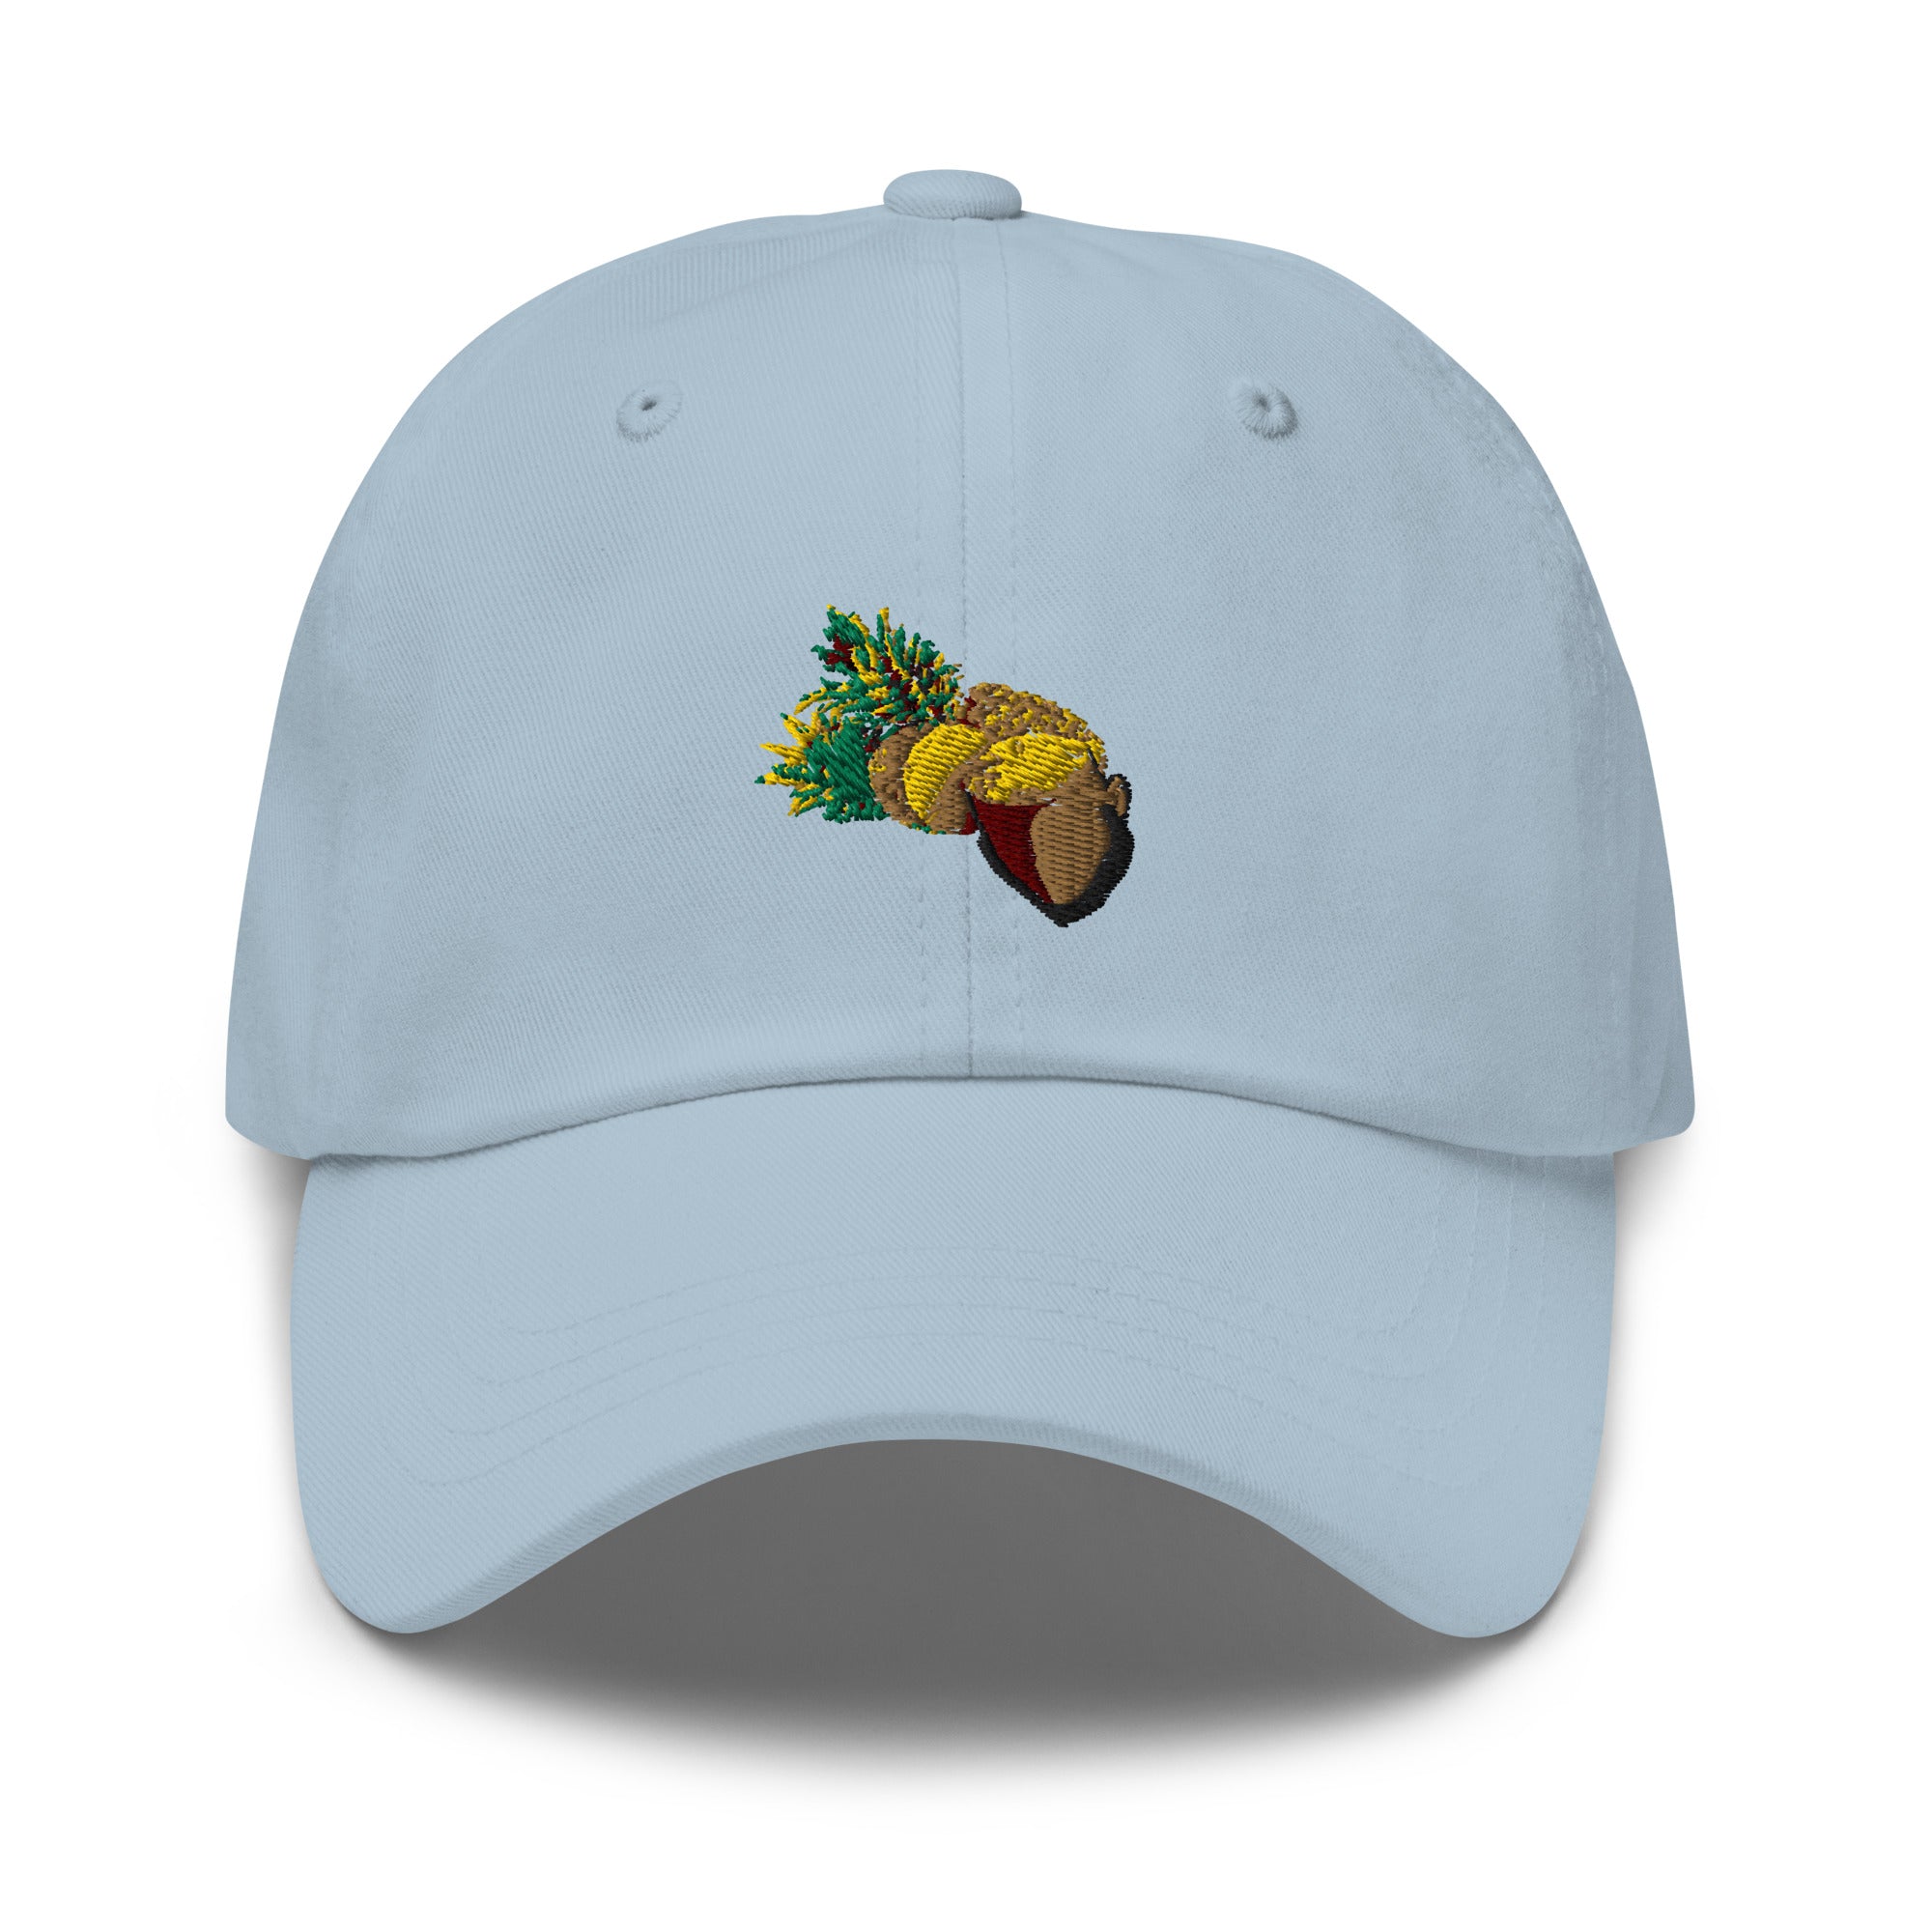 Pineapple - Beared Fruit Dad hat